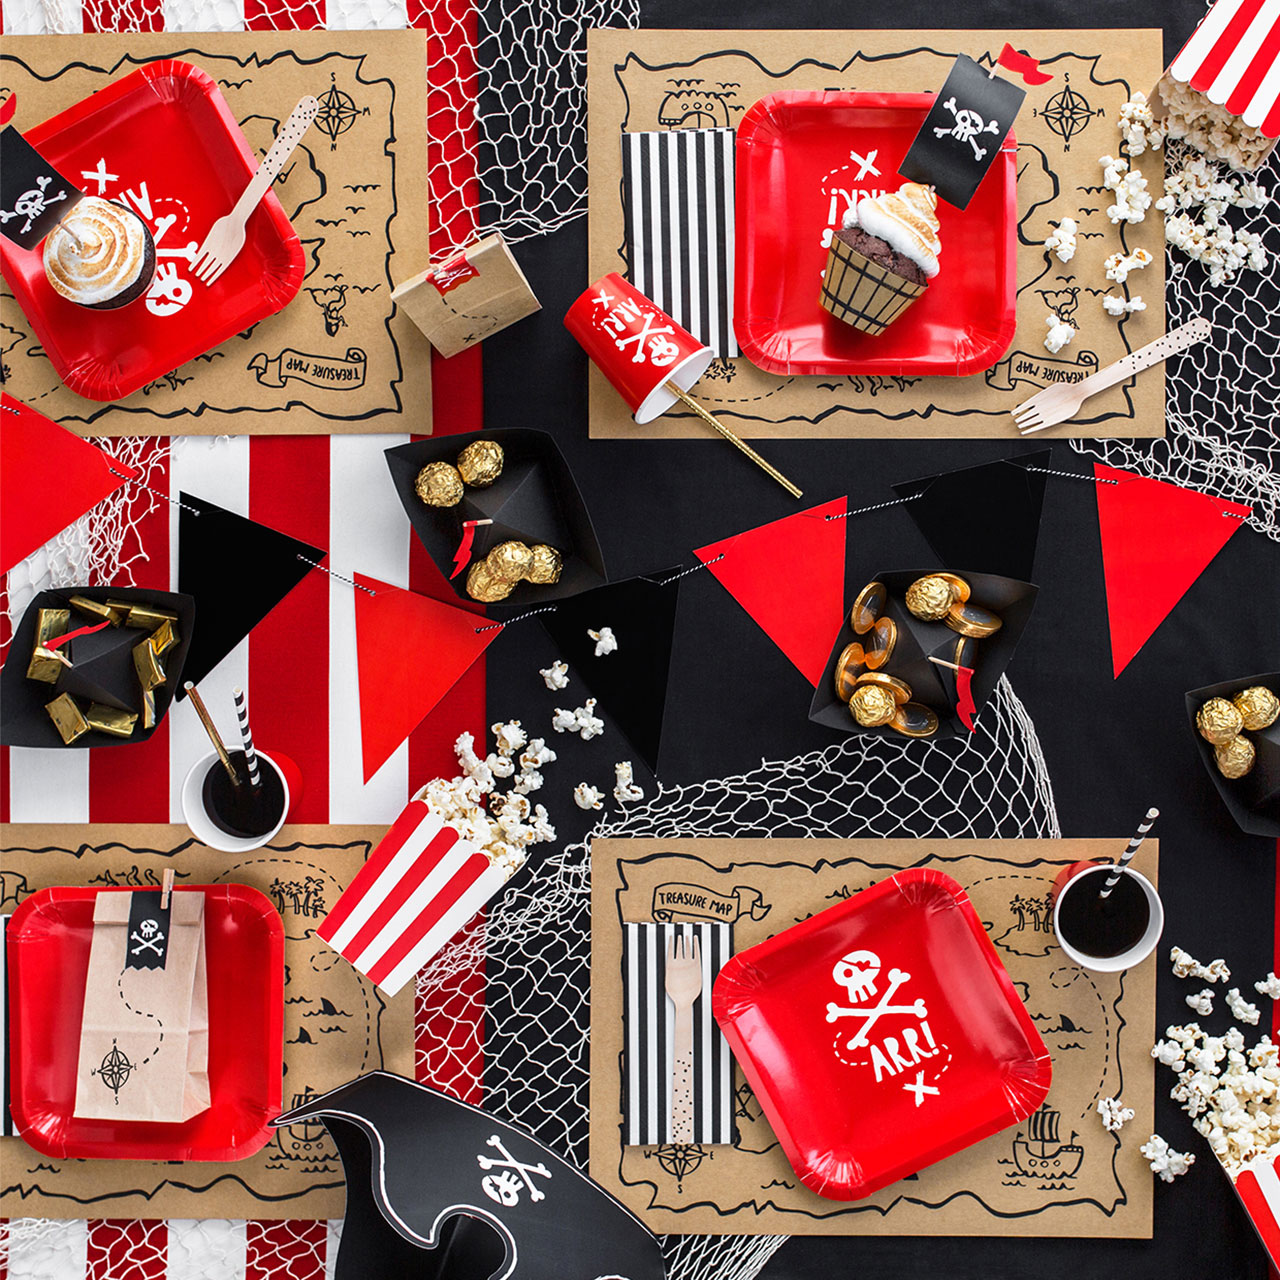 6 Red & White Stripe Popcorn Boxes